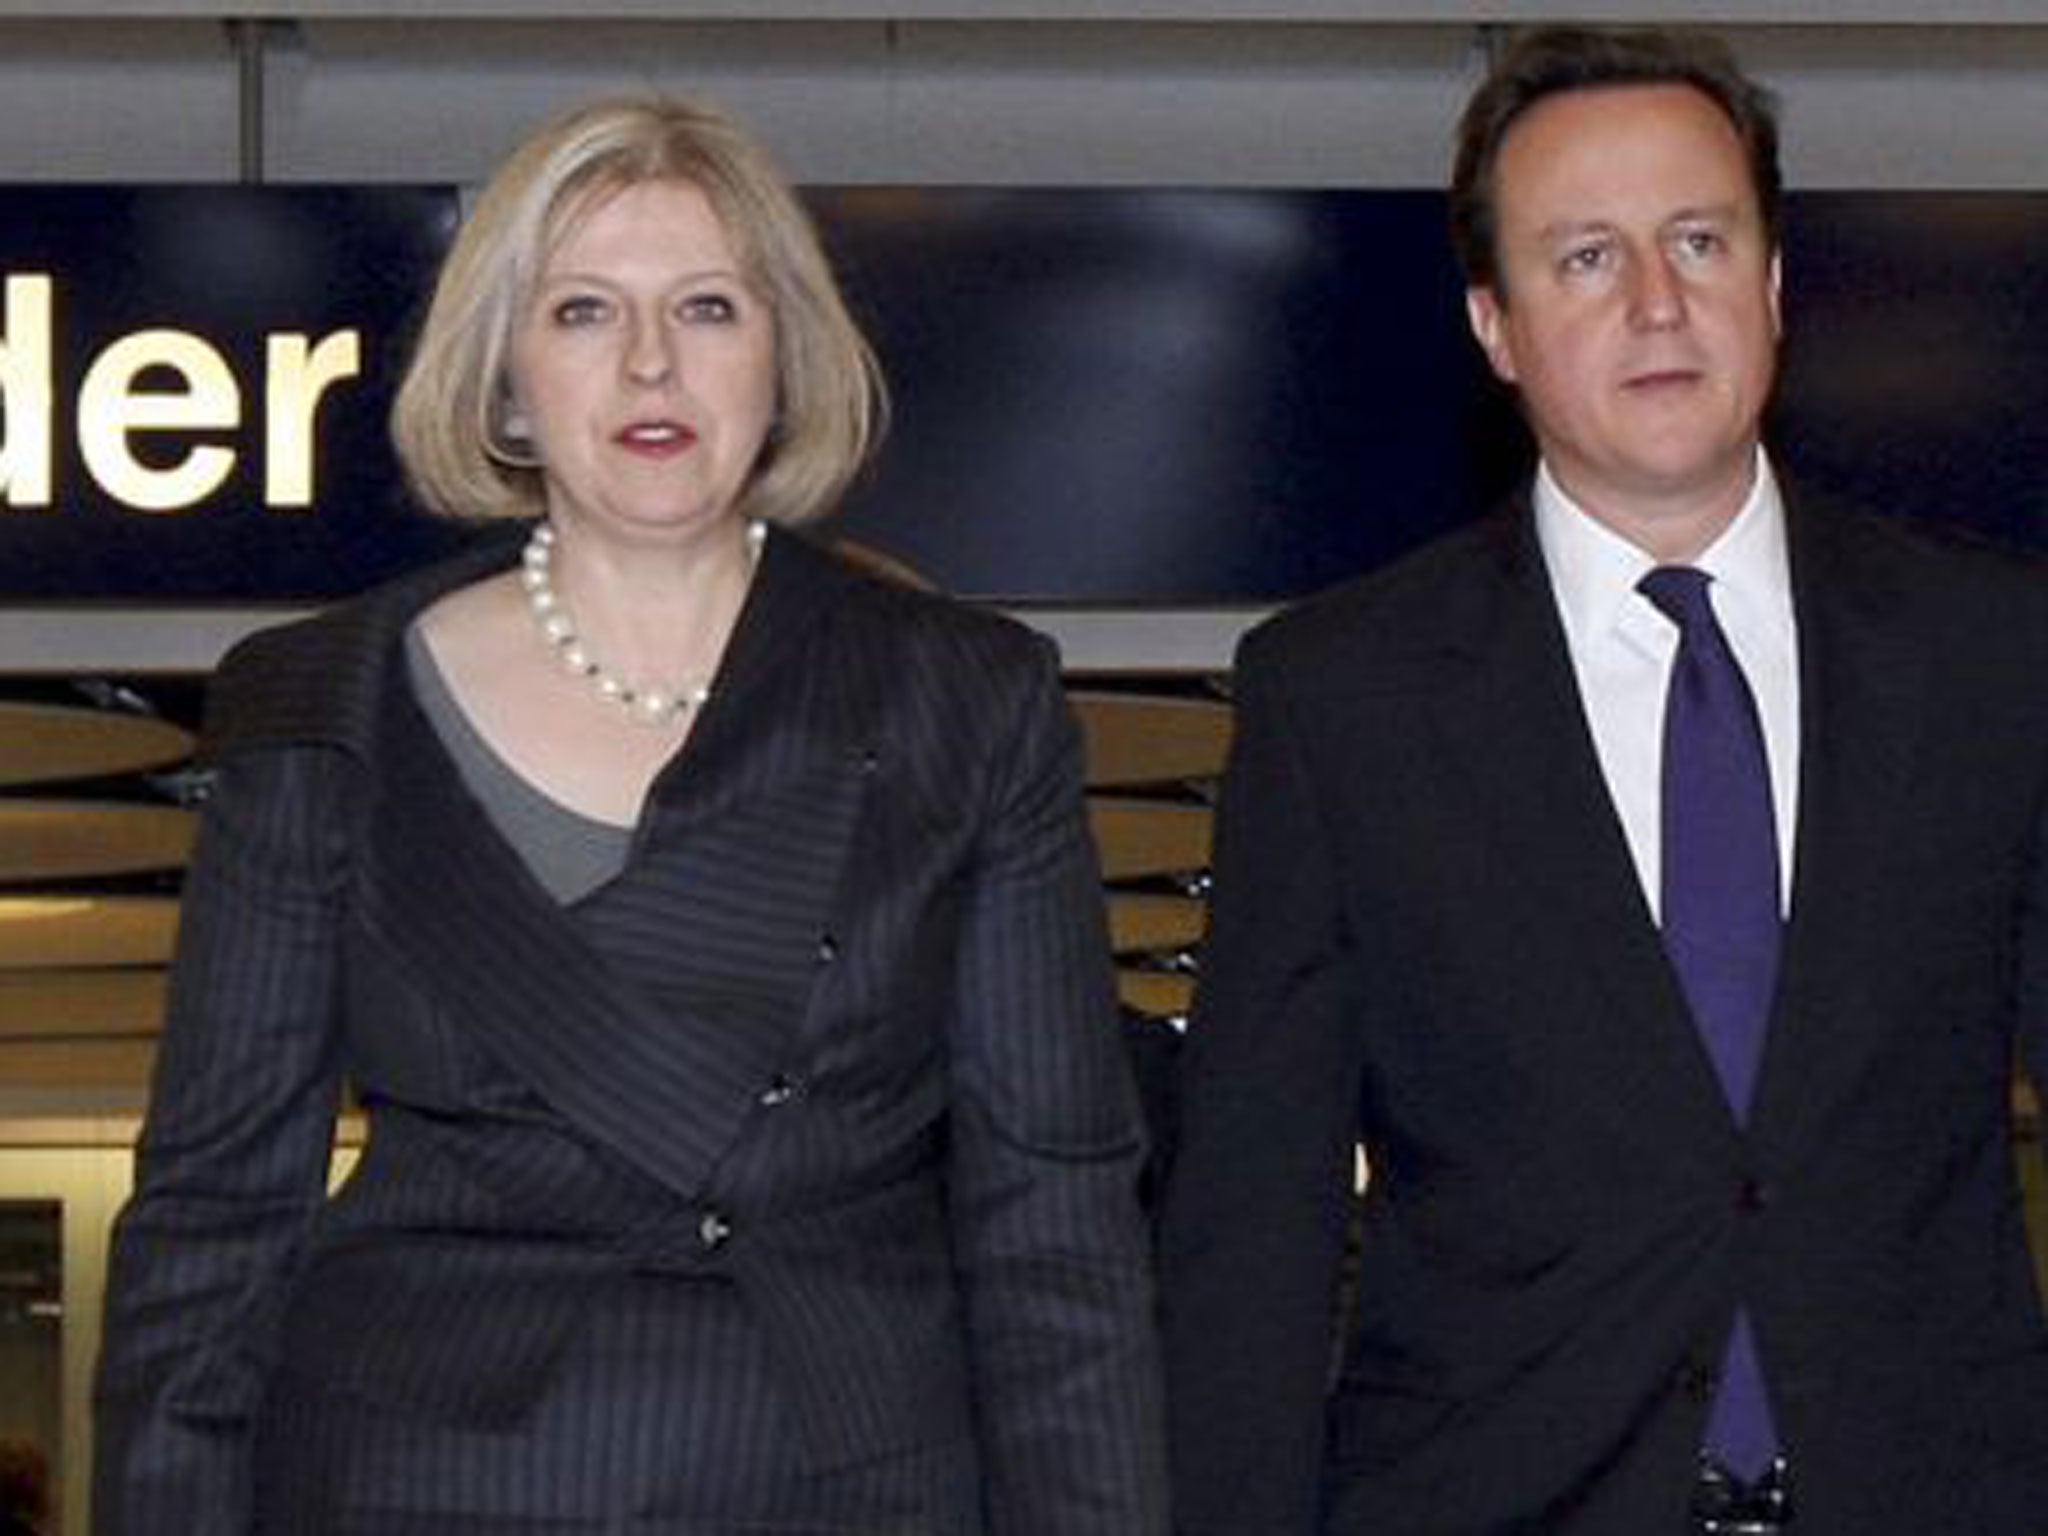 Theresa May and David Cameron are both seeking to build support among Tory MPs